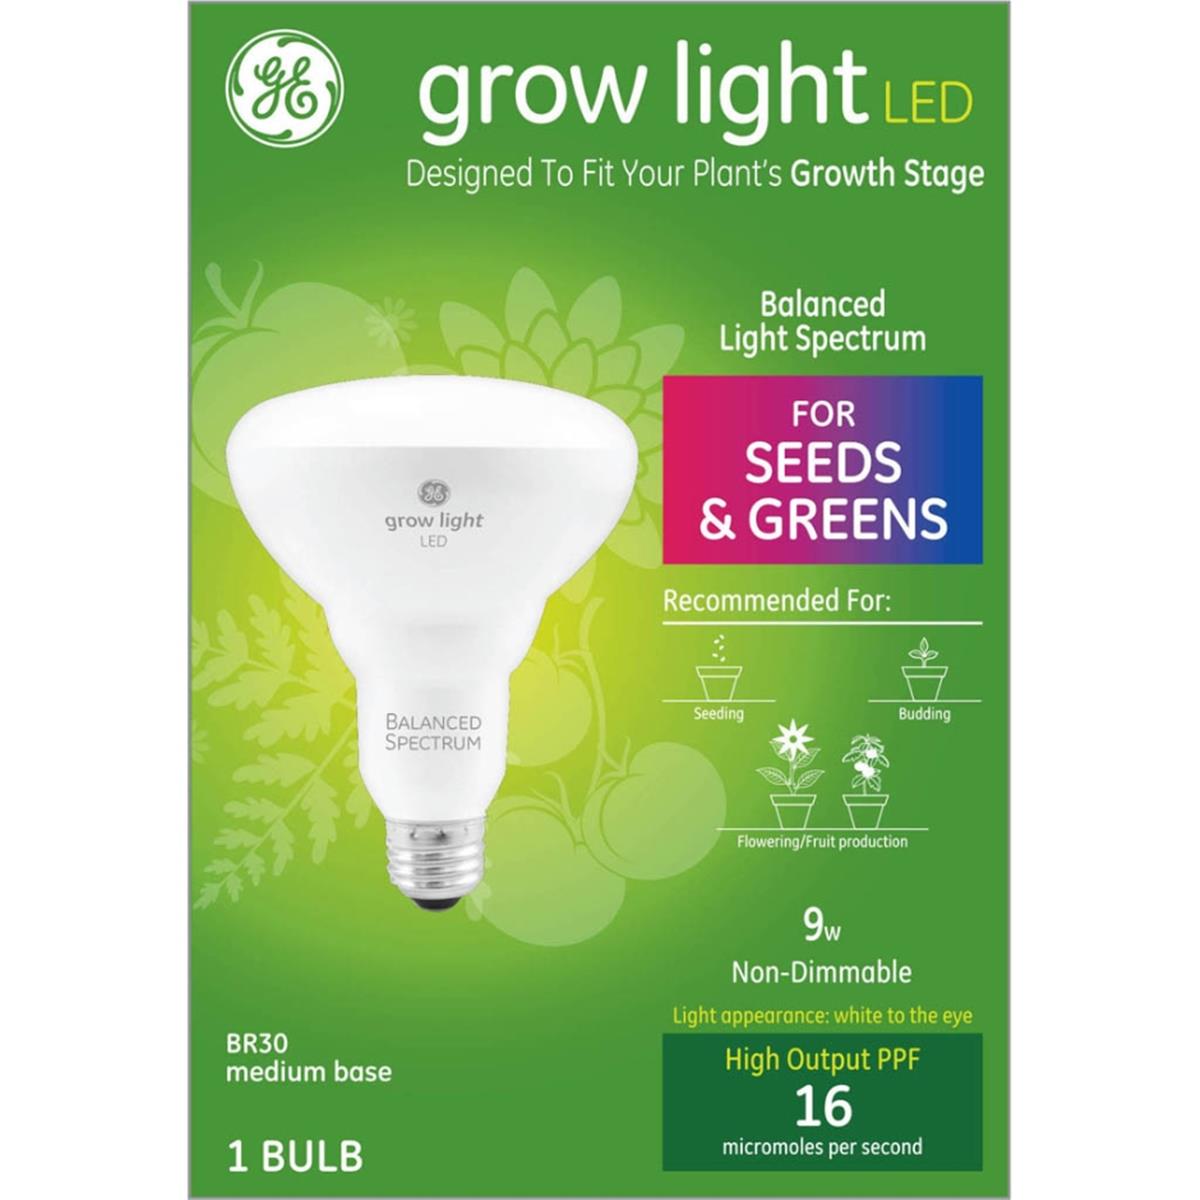 93101230 9 Watt Grow Light Led Bulb For Seed & Greens